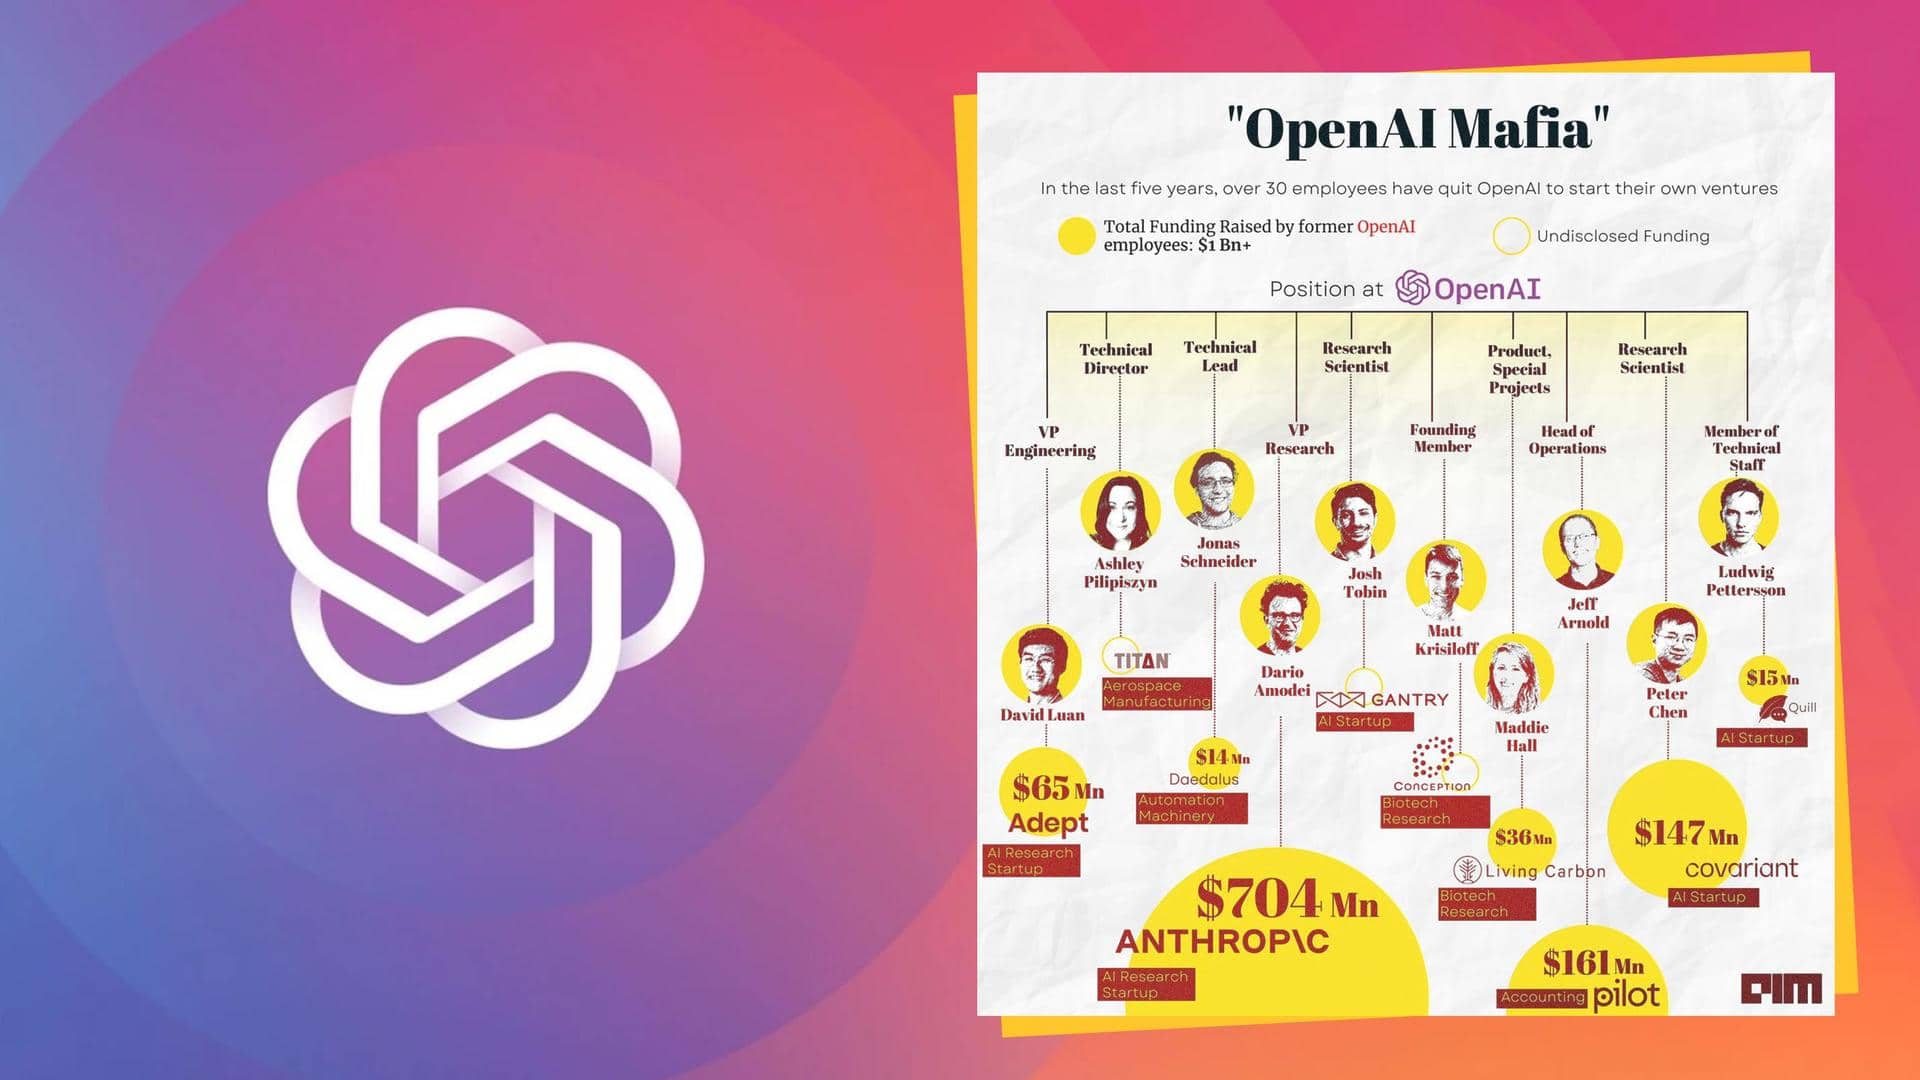 'OpenAI Mafia' has raised over $1 billion: Who are they